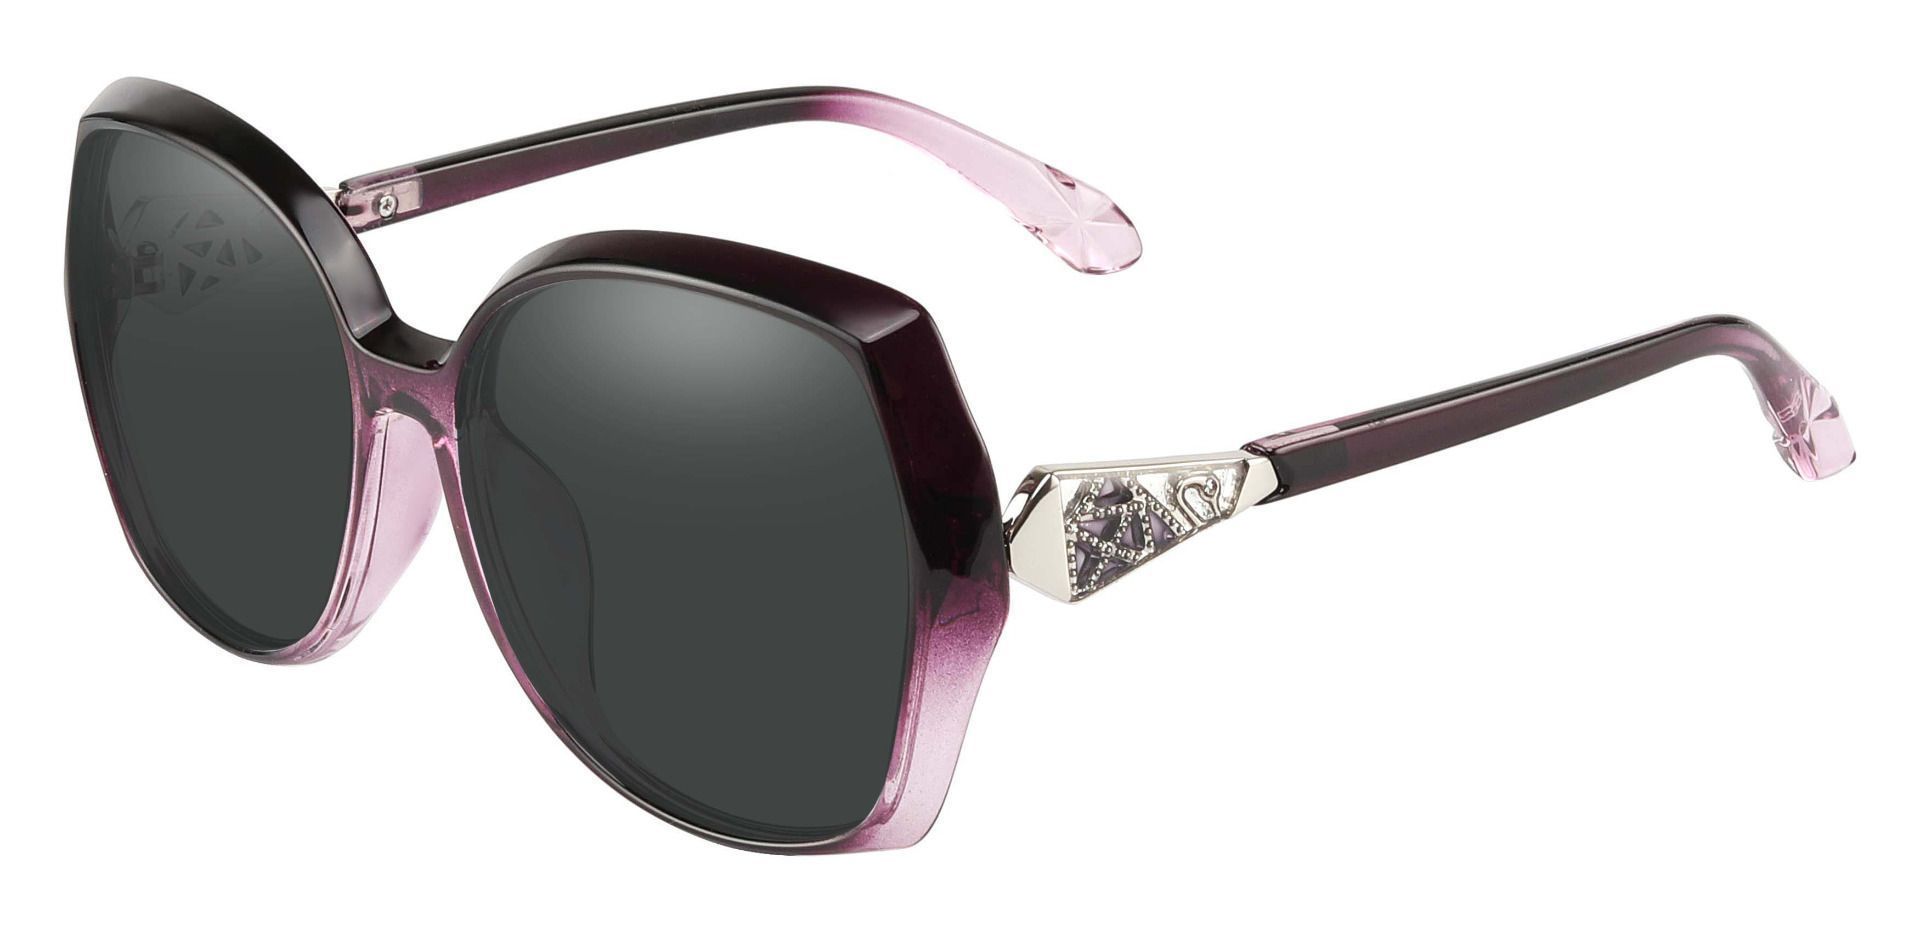 Swan Geometric Non-Rx Sunglasses - Purple Frame With Gray Lenses